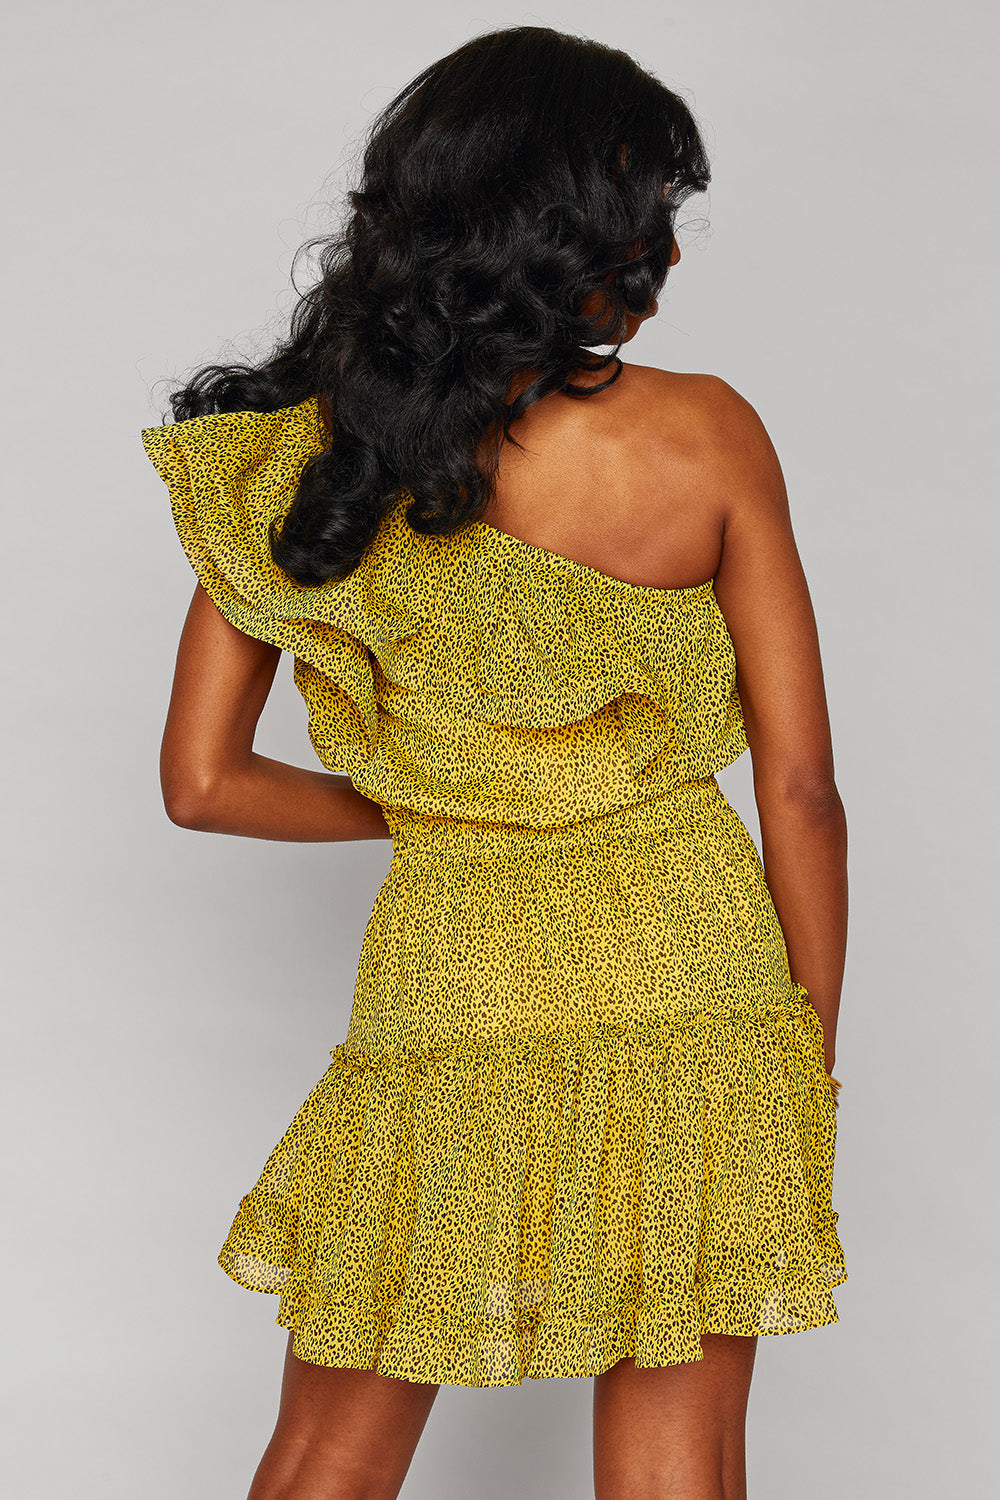 Sofia One Shoulder Ruffle Mini Dress- Yellow Animal Print